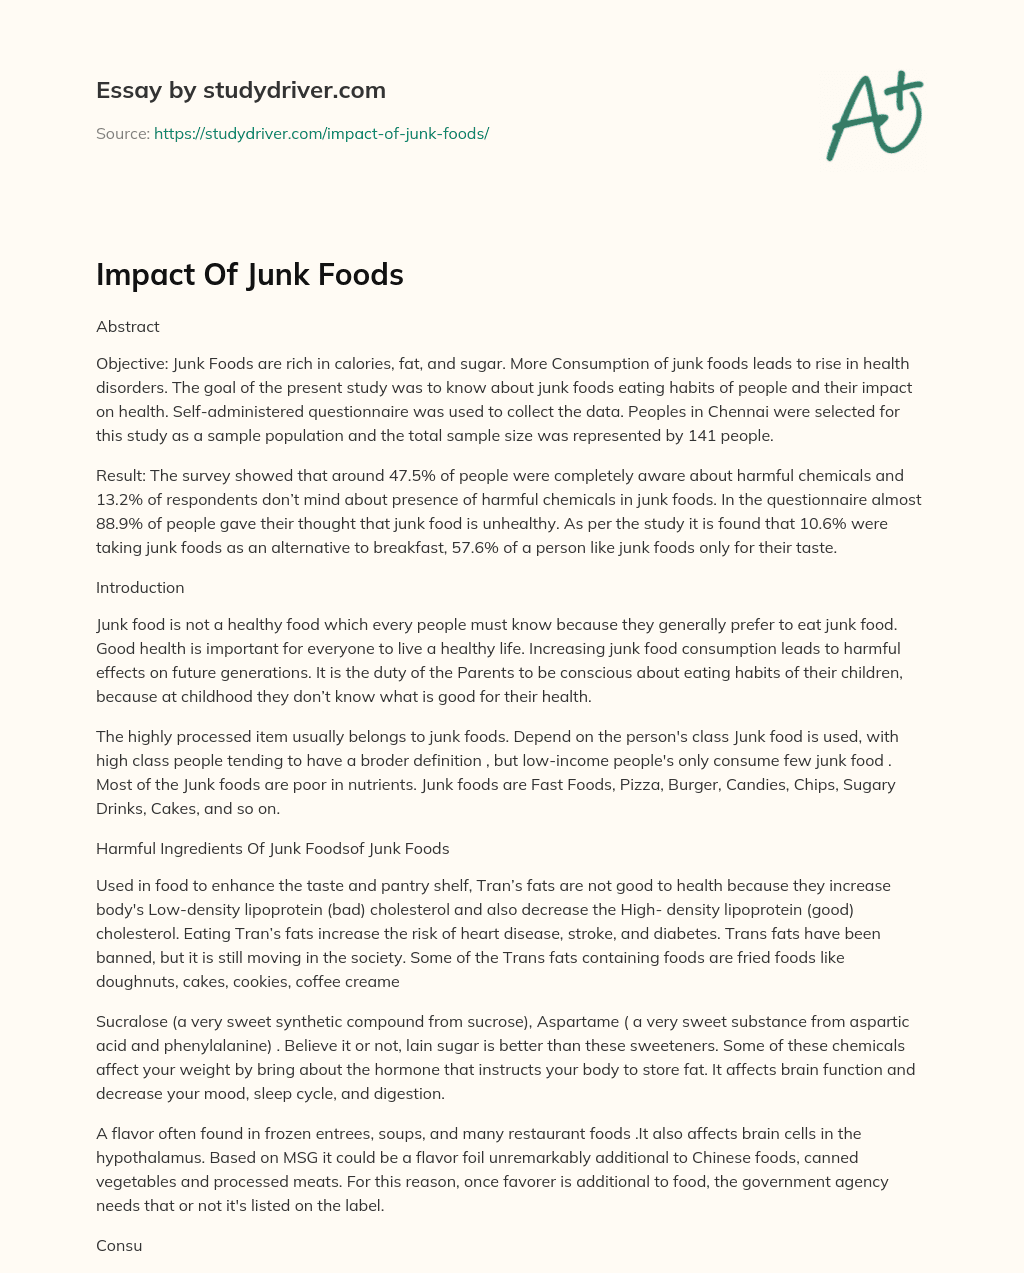 Impact of Junk Foods essay